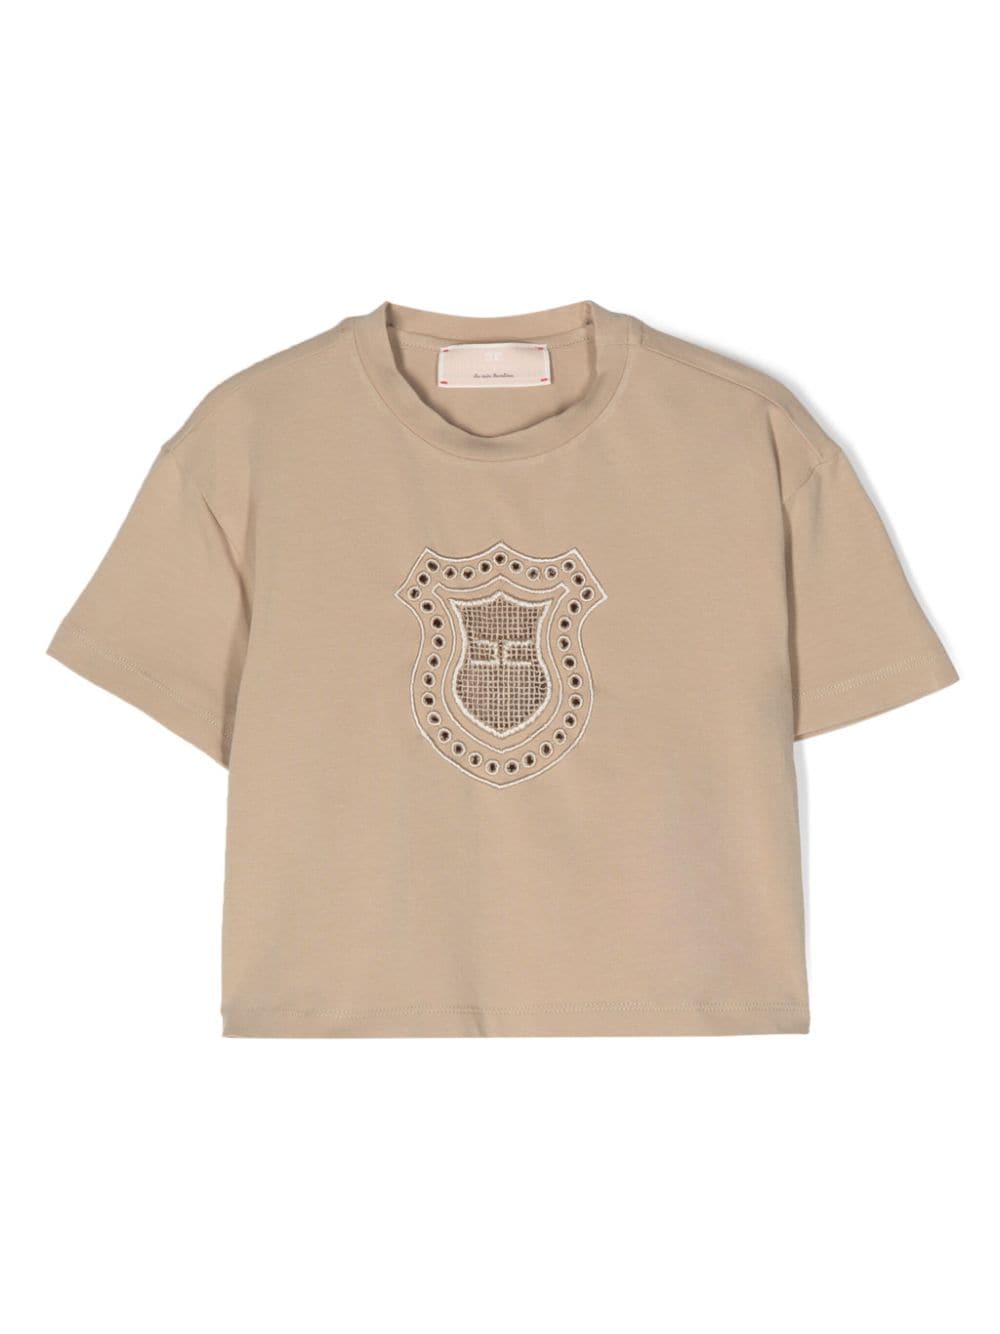 Elisabetta Franchi La Mia Bambina broderie-anglaise cotton T-shirt - Neutrals von Elisabetta Franchi La Mia Bambina